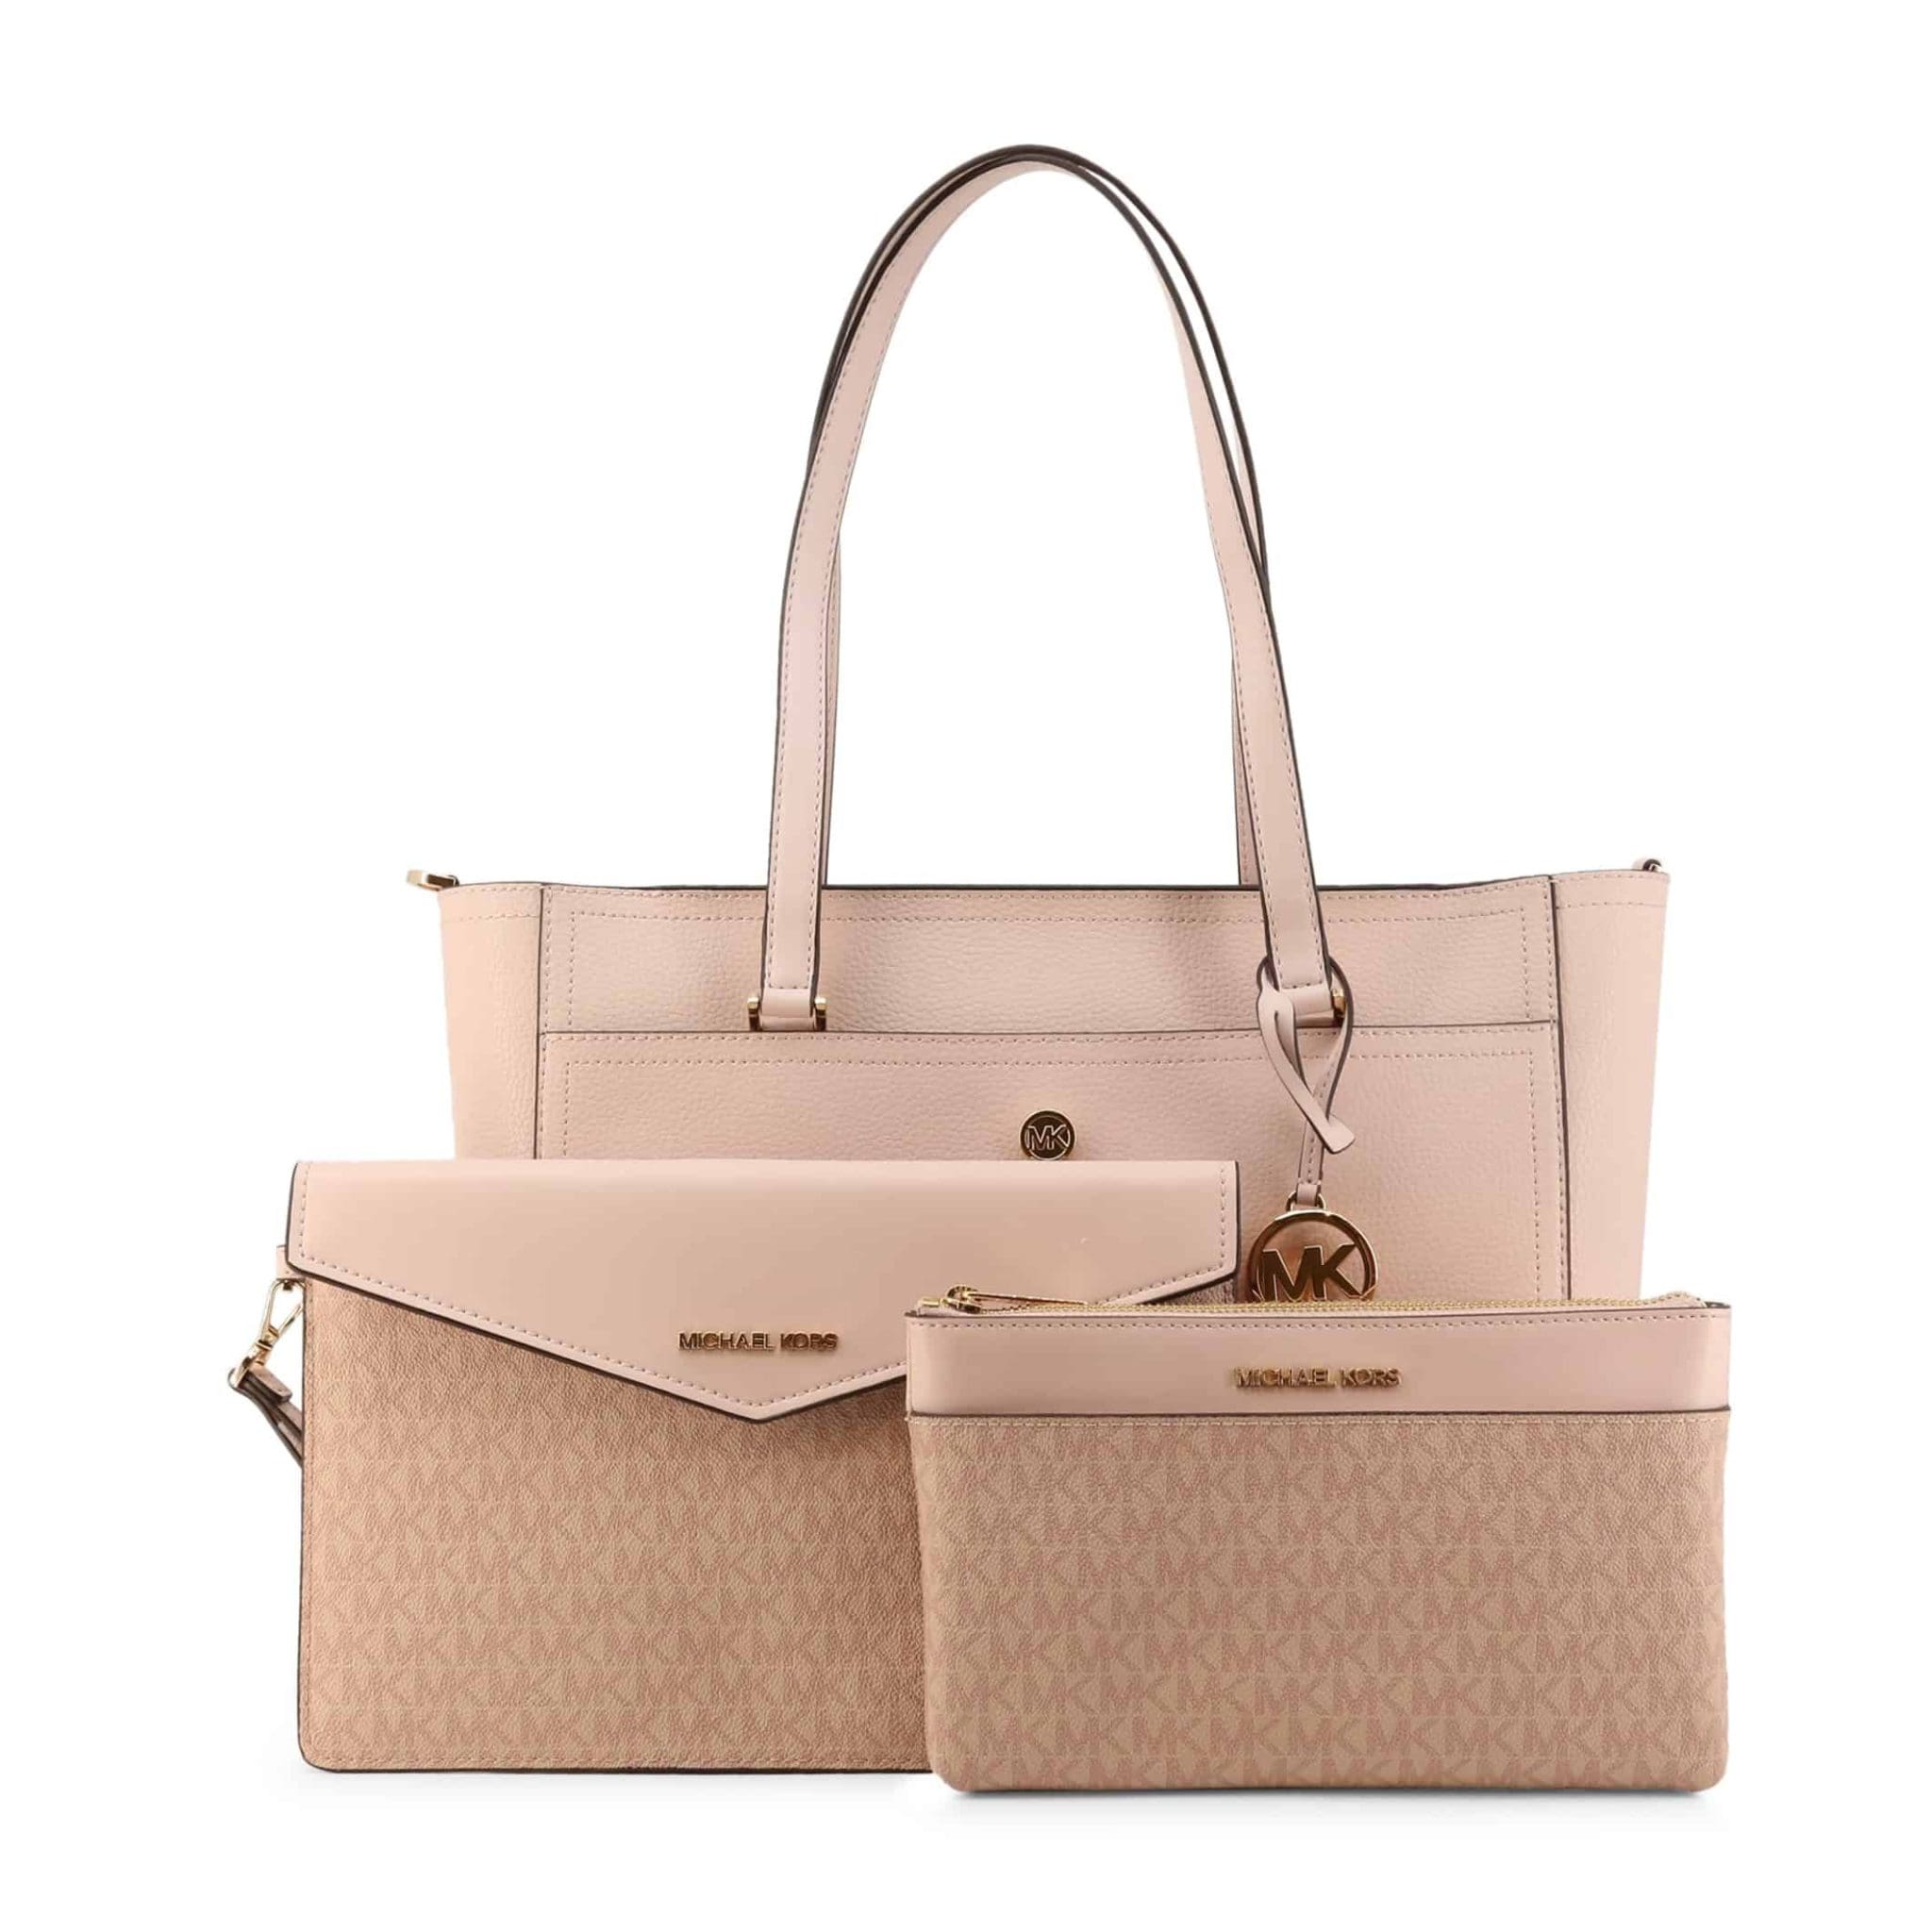 Michael Kors Shopping Bag Pink - Maisie_35T1G5Mt7T 4